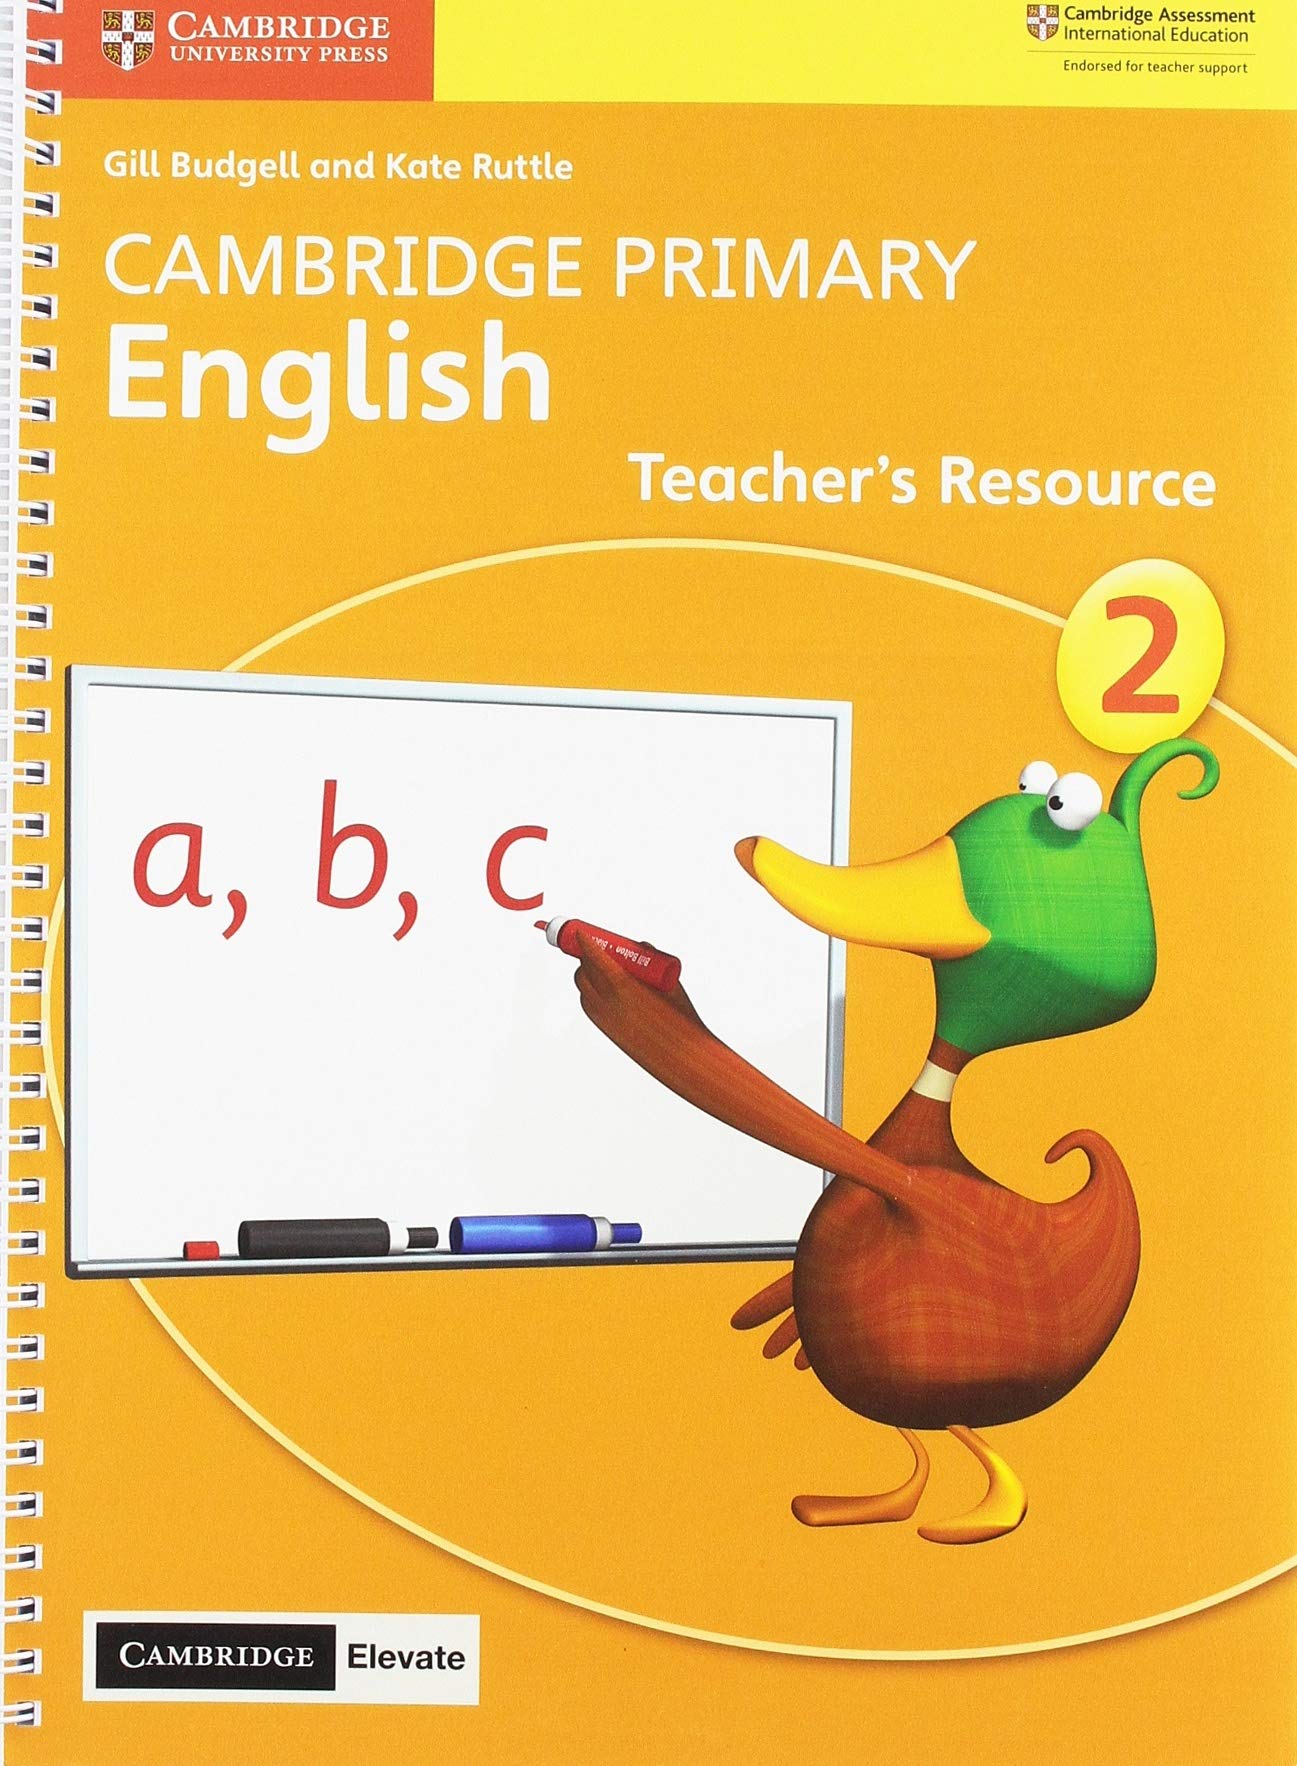 Cambridge Primary English. Cambridge Primary English 2. Cambridge Primary English 3. English for Primary teachers. Https cambridge org